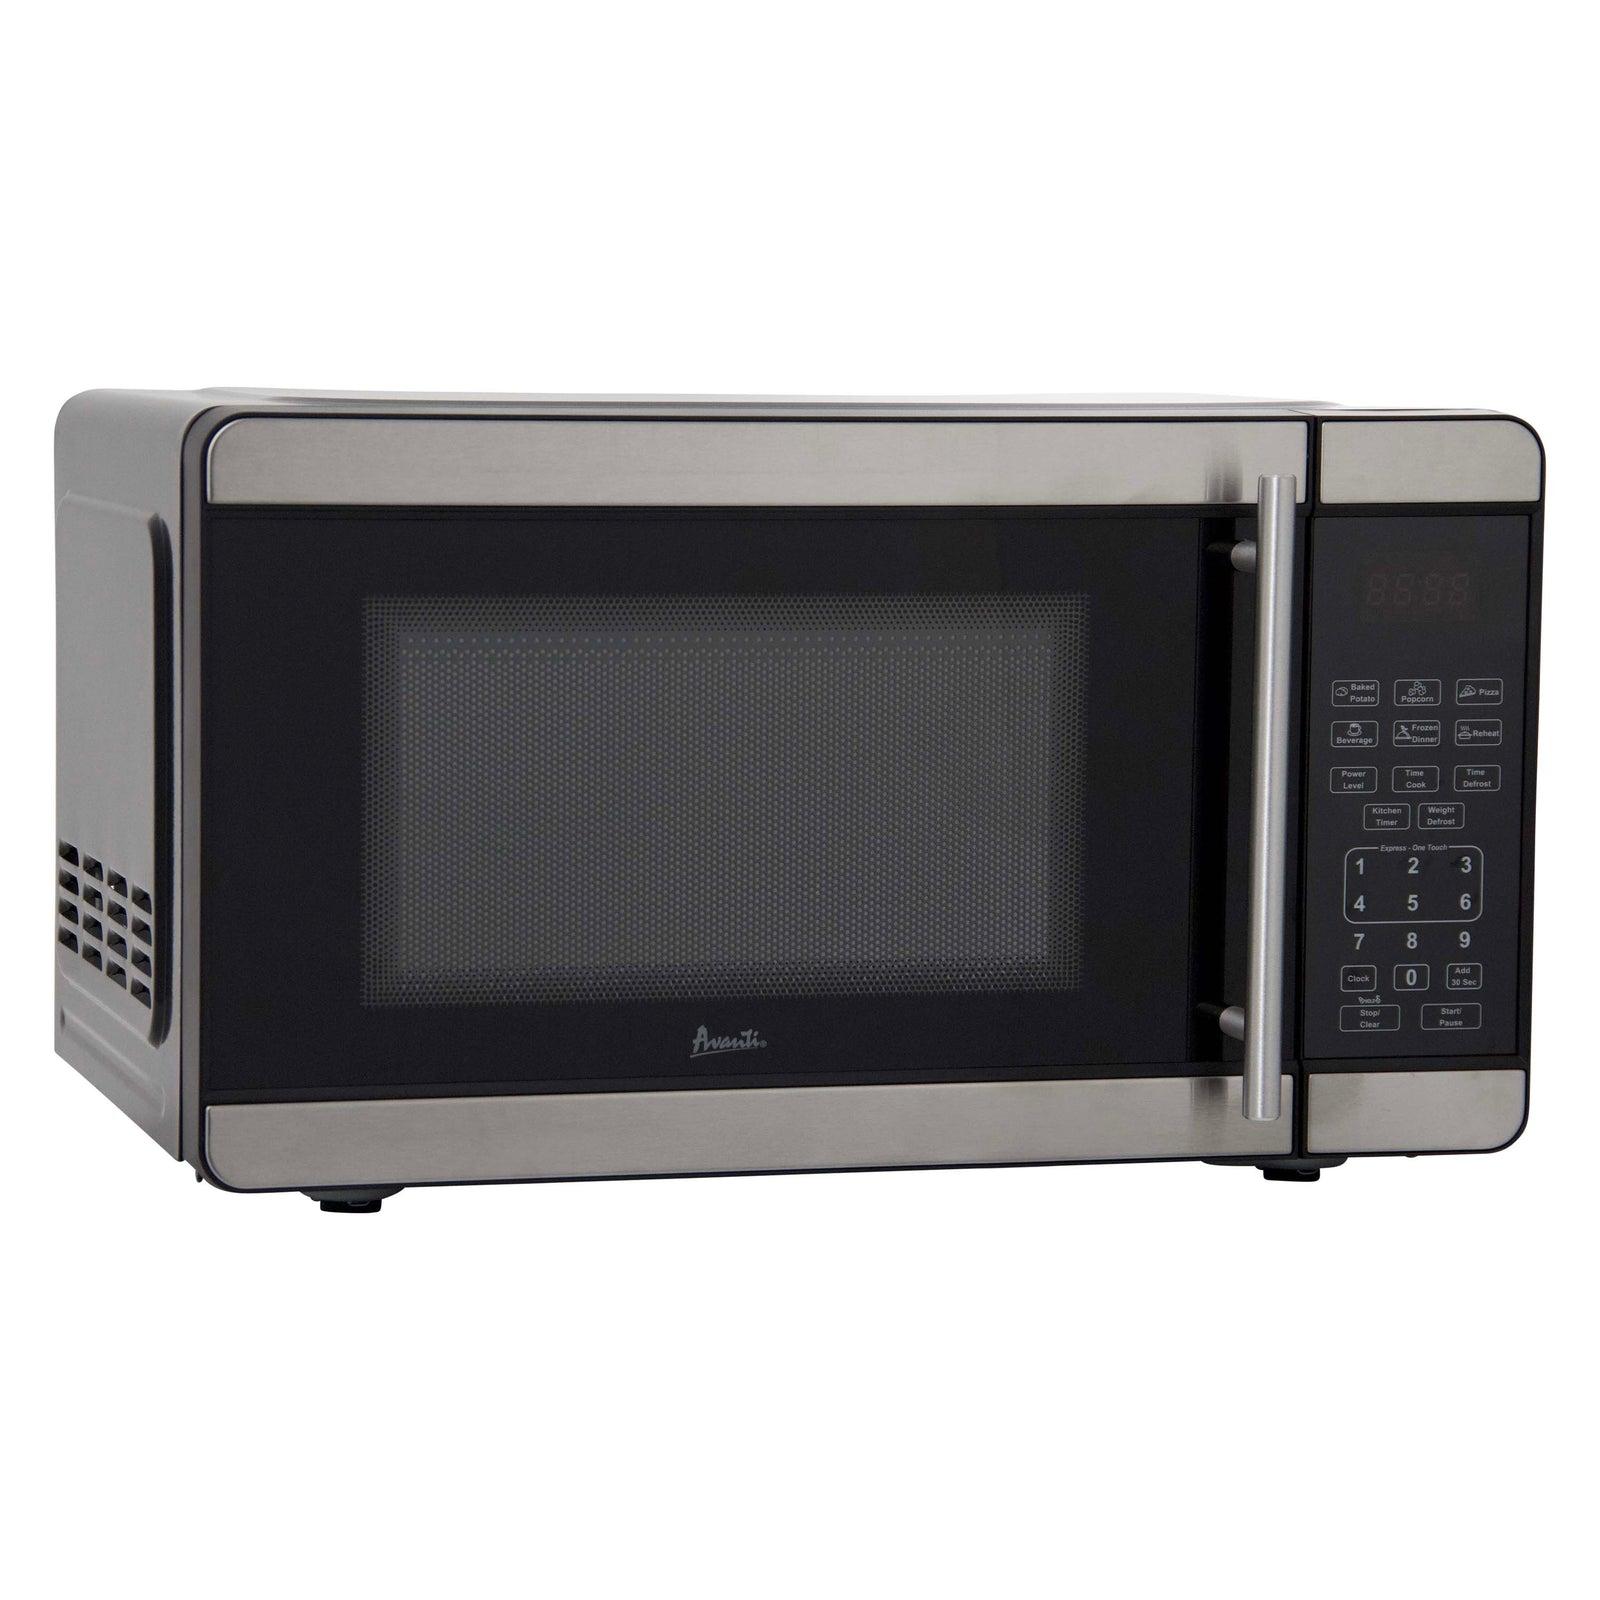 Avanti Countertop Microwave Oven, 0.7 cu. ft. - White / 0.7 cu. ft.